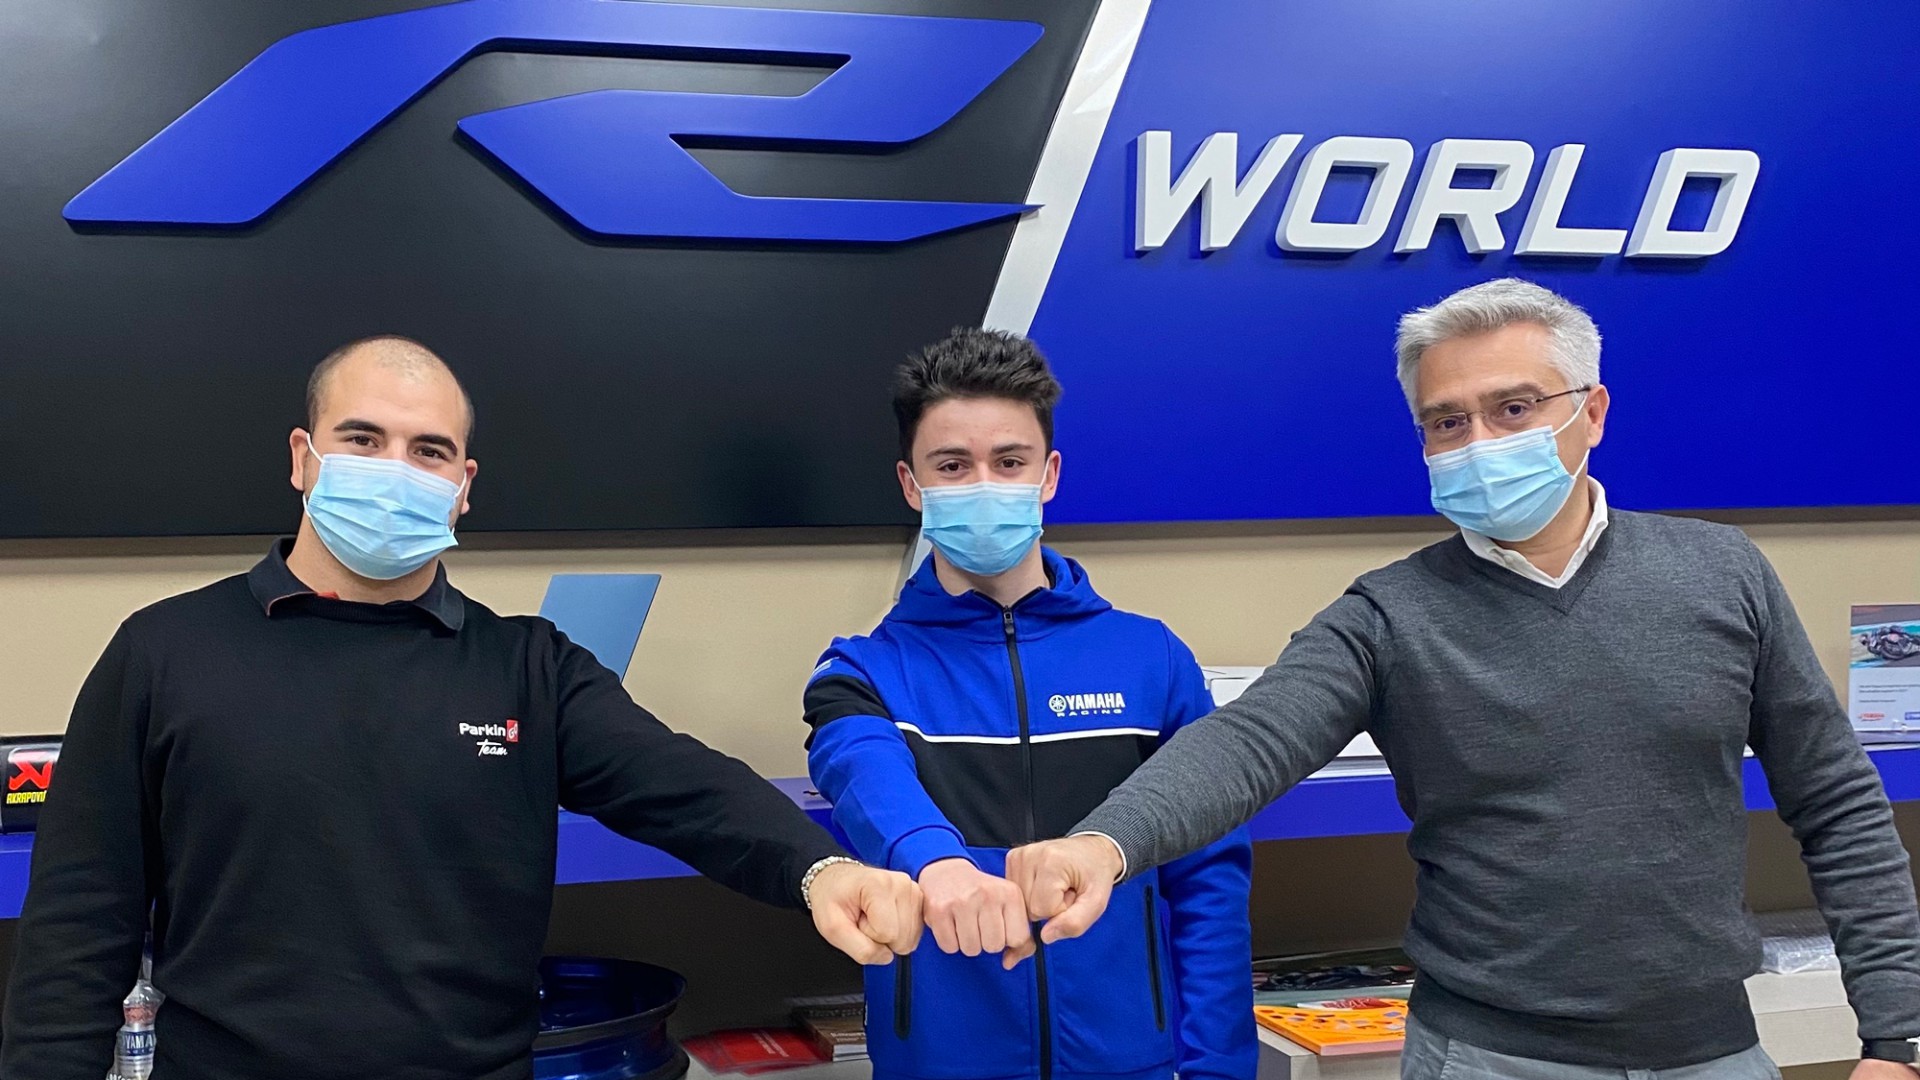 Dopo 10 anni il team ParkinGO torna con Yamaha Motor Europe per il mondiale Supersport 2021. Manuel Gonzalez il pilota di punta